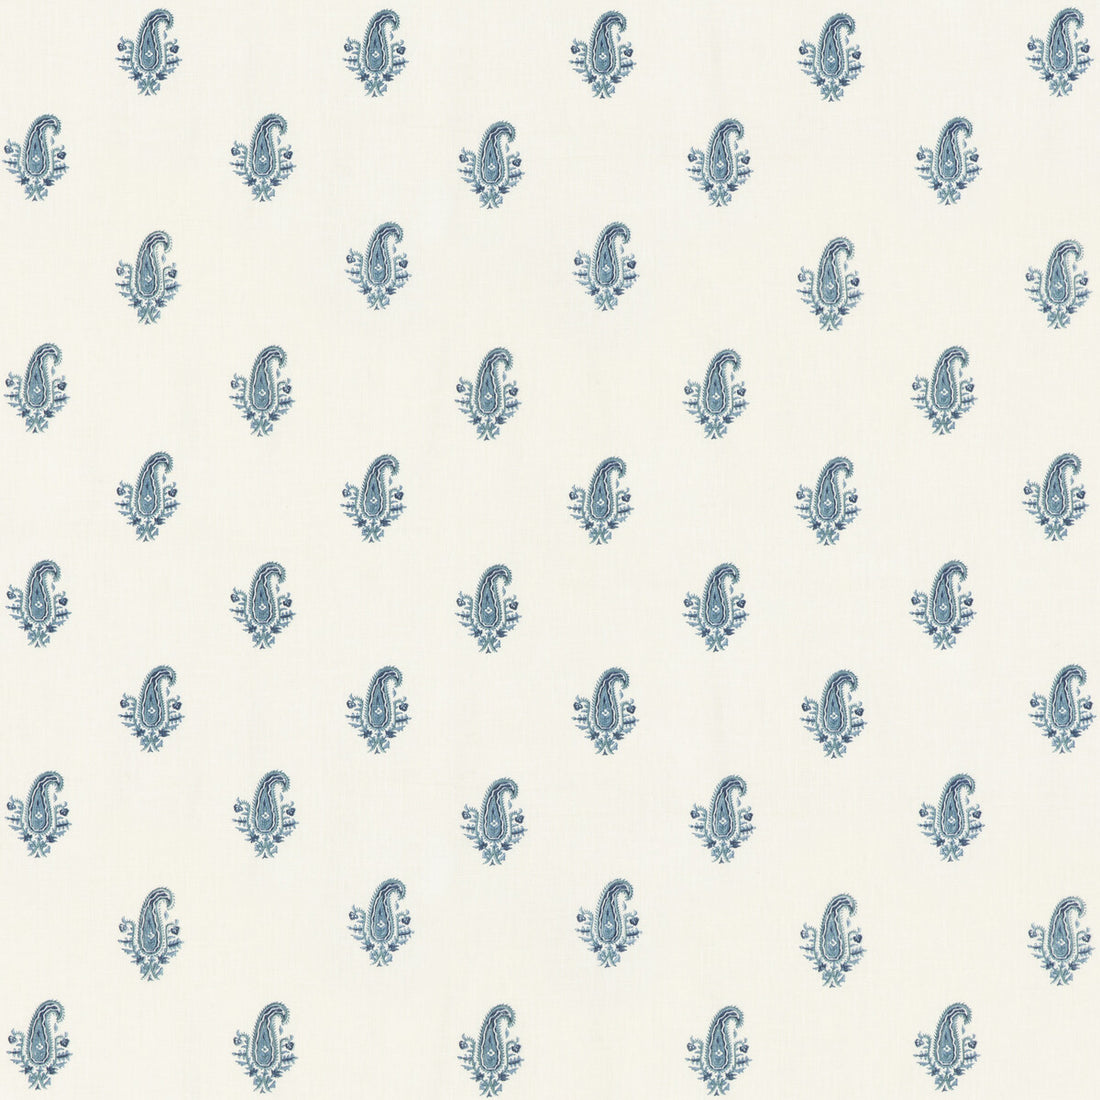 Pimlico fabric in indigo color - pattern BP10934.1.0 - by G P &amp; J Baker in the Portobello collection